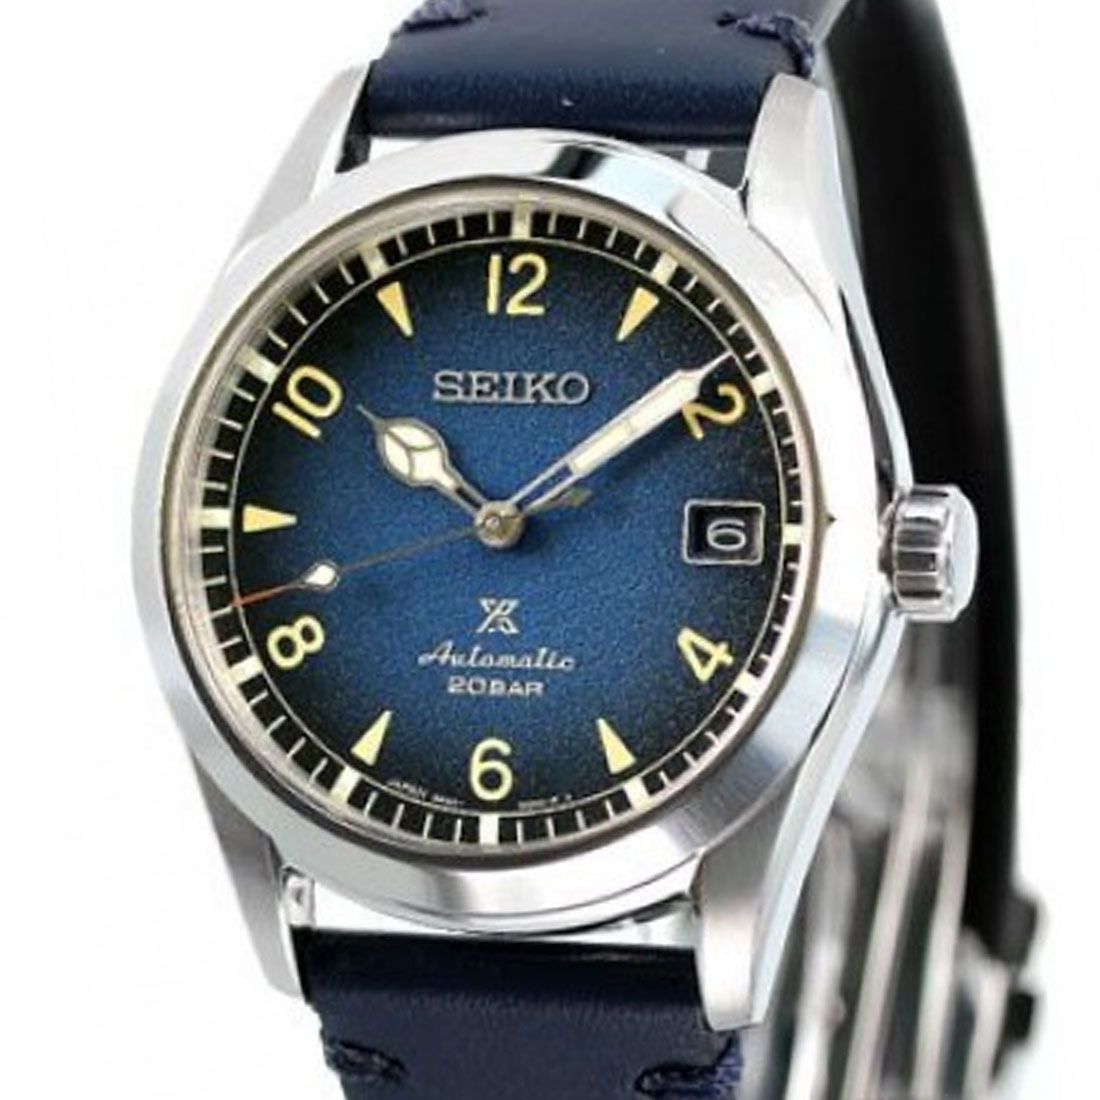 Seiko Prospex Alpinist Automatic Blue Dial JDM Watch SBDC117 -Seiko